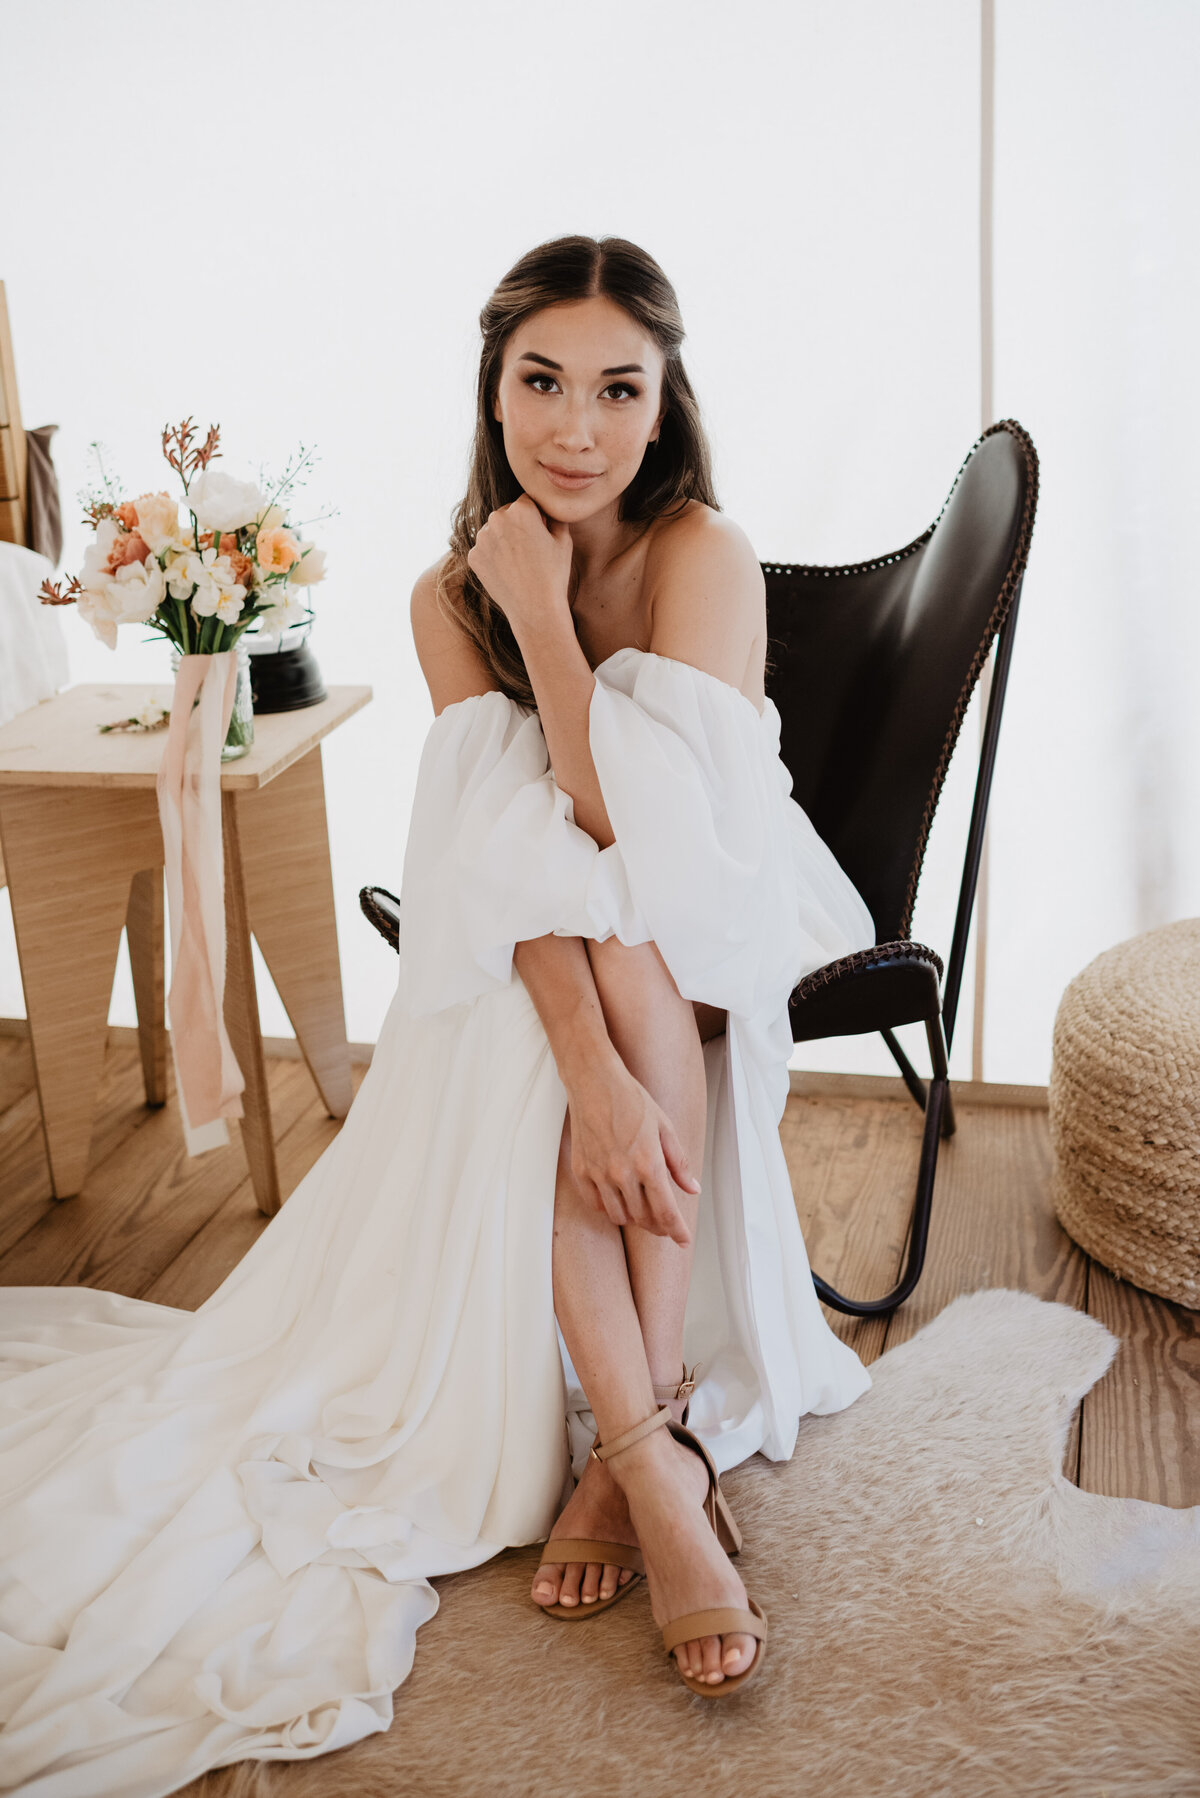 Utah Elopement Photographer captures woman wearing wedding dress during bridal portraits